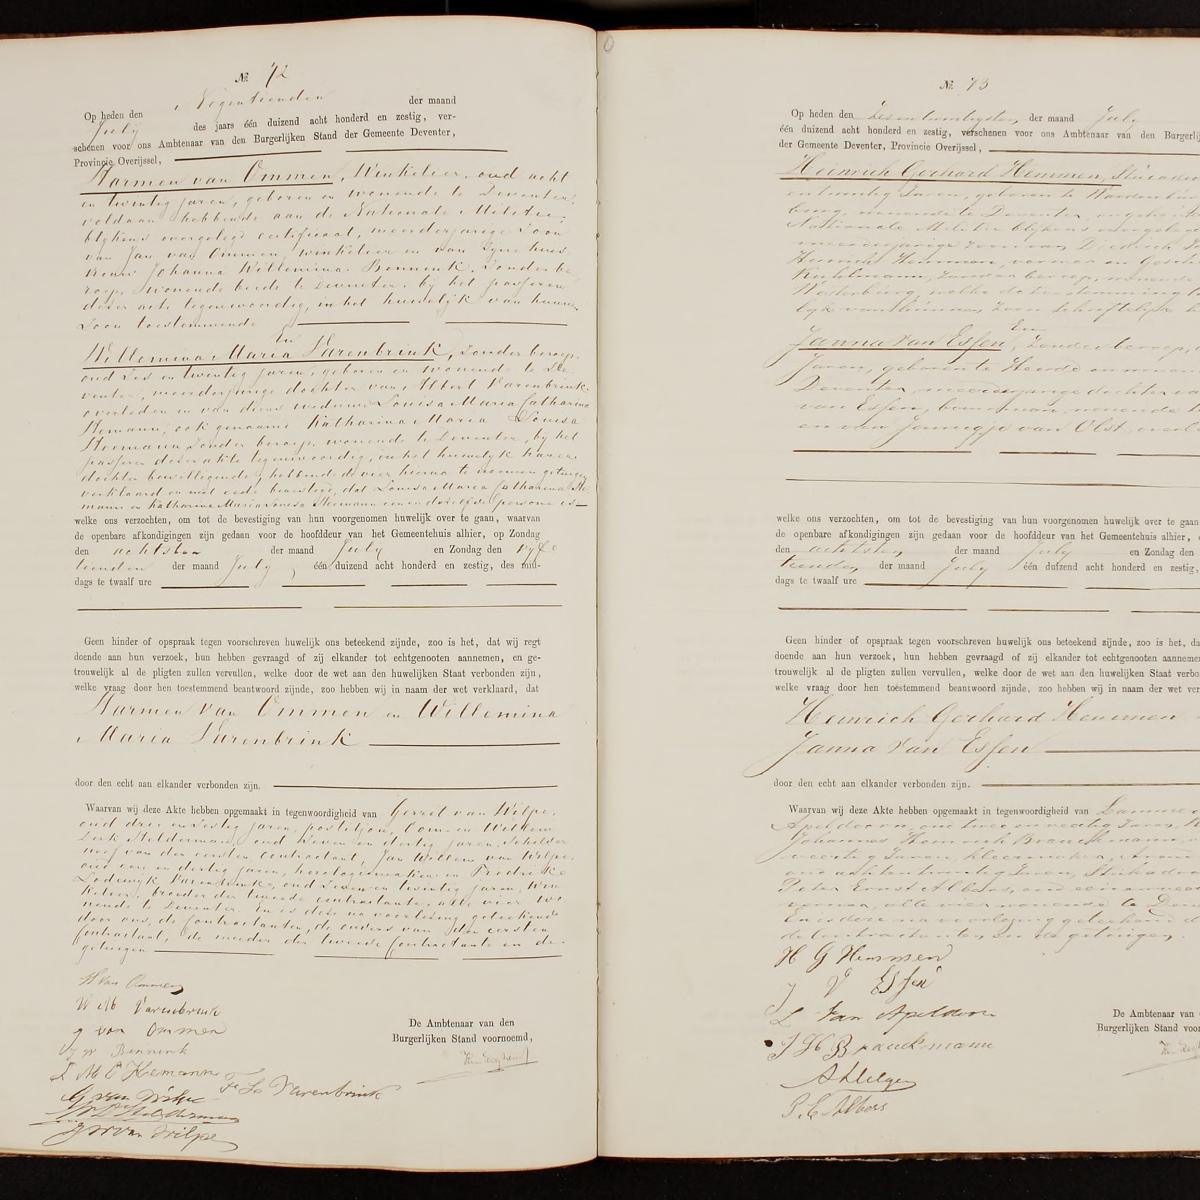 Civil registry of marriages, Deventer, 1860, records 72-73